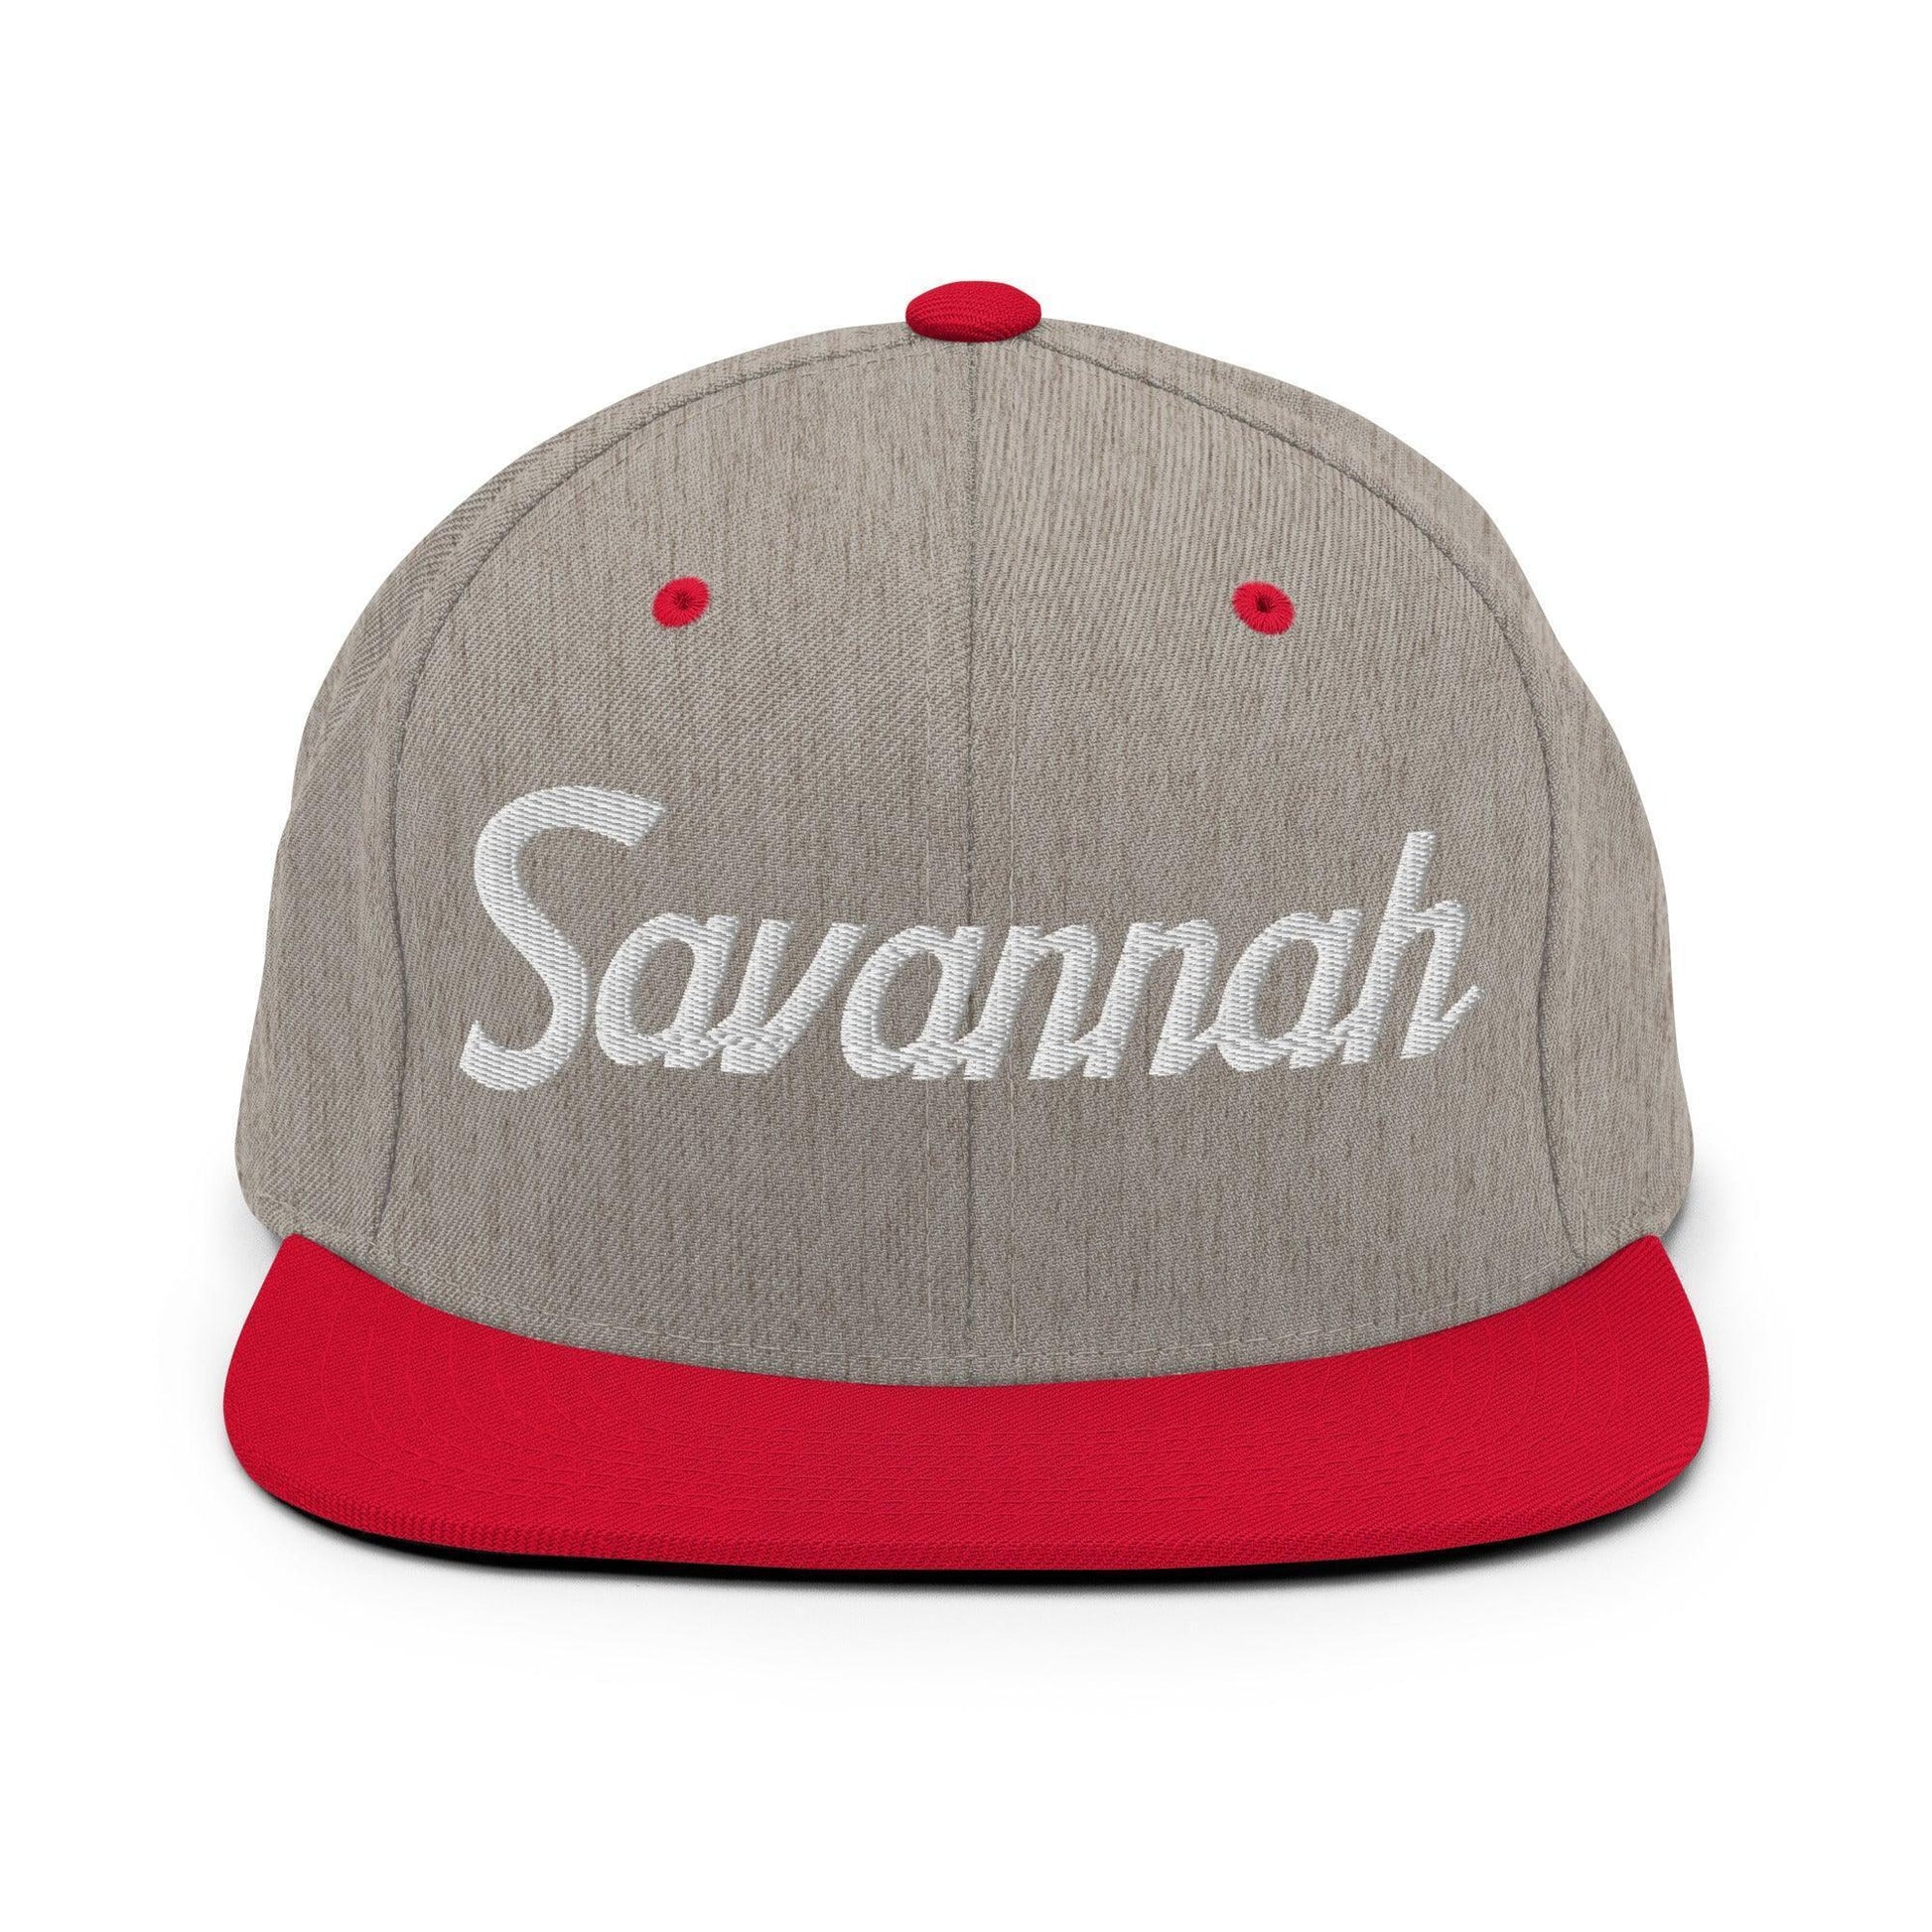 Savannah Script Snapback Hat Heather Grey/ Red